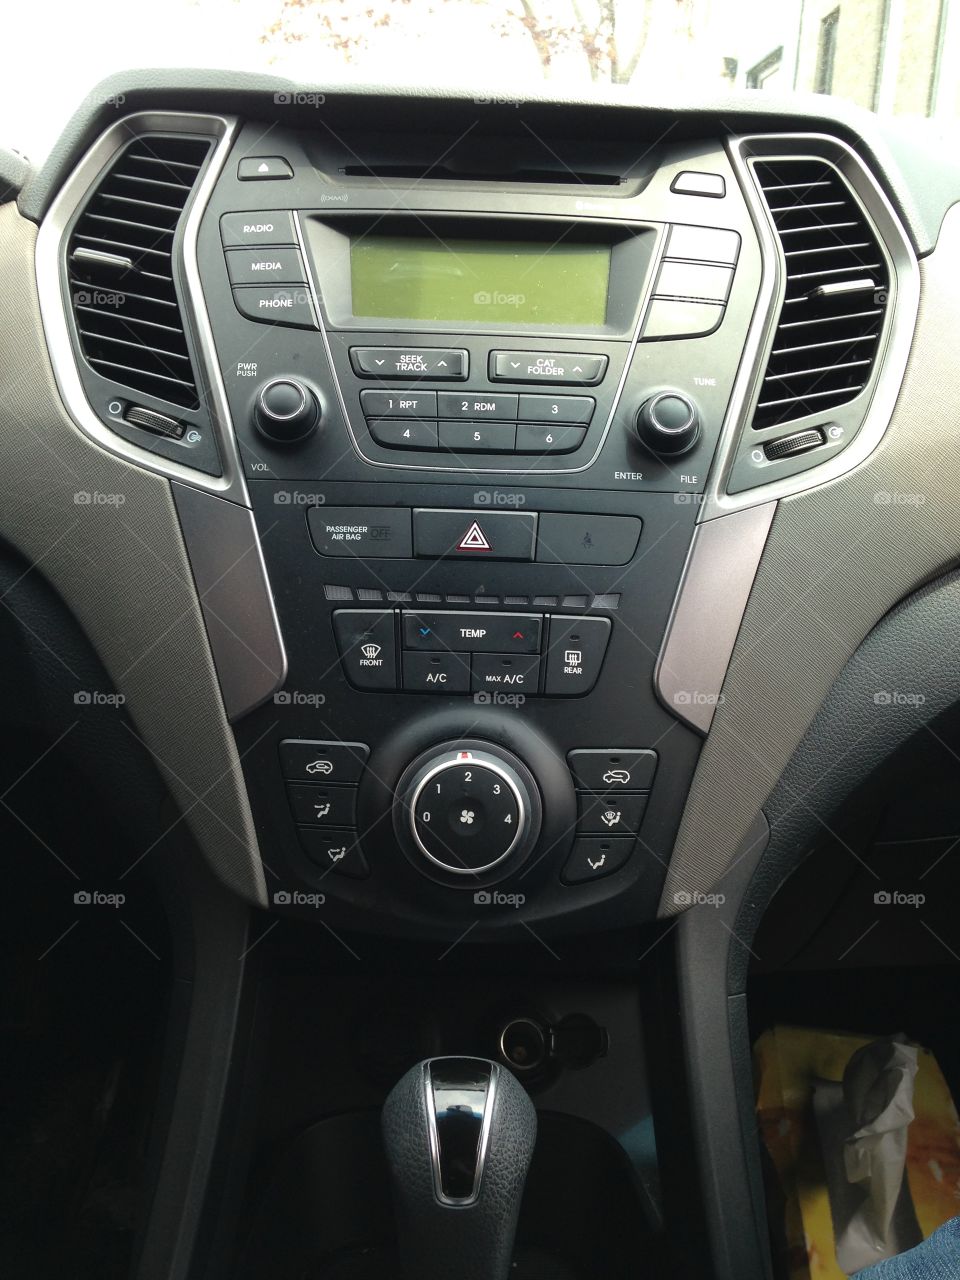 Centre console dashboard and stereo controls on a Hyundai Santa Fe